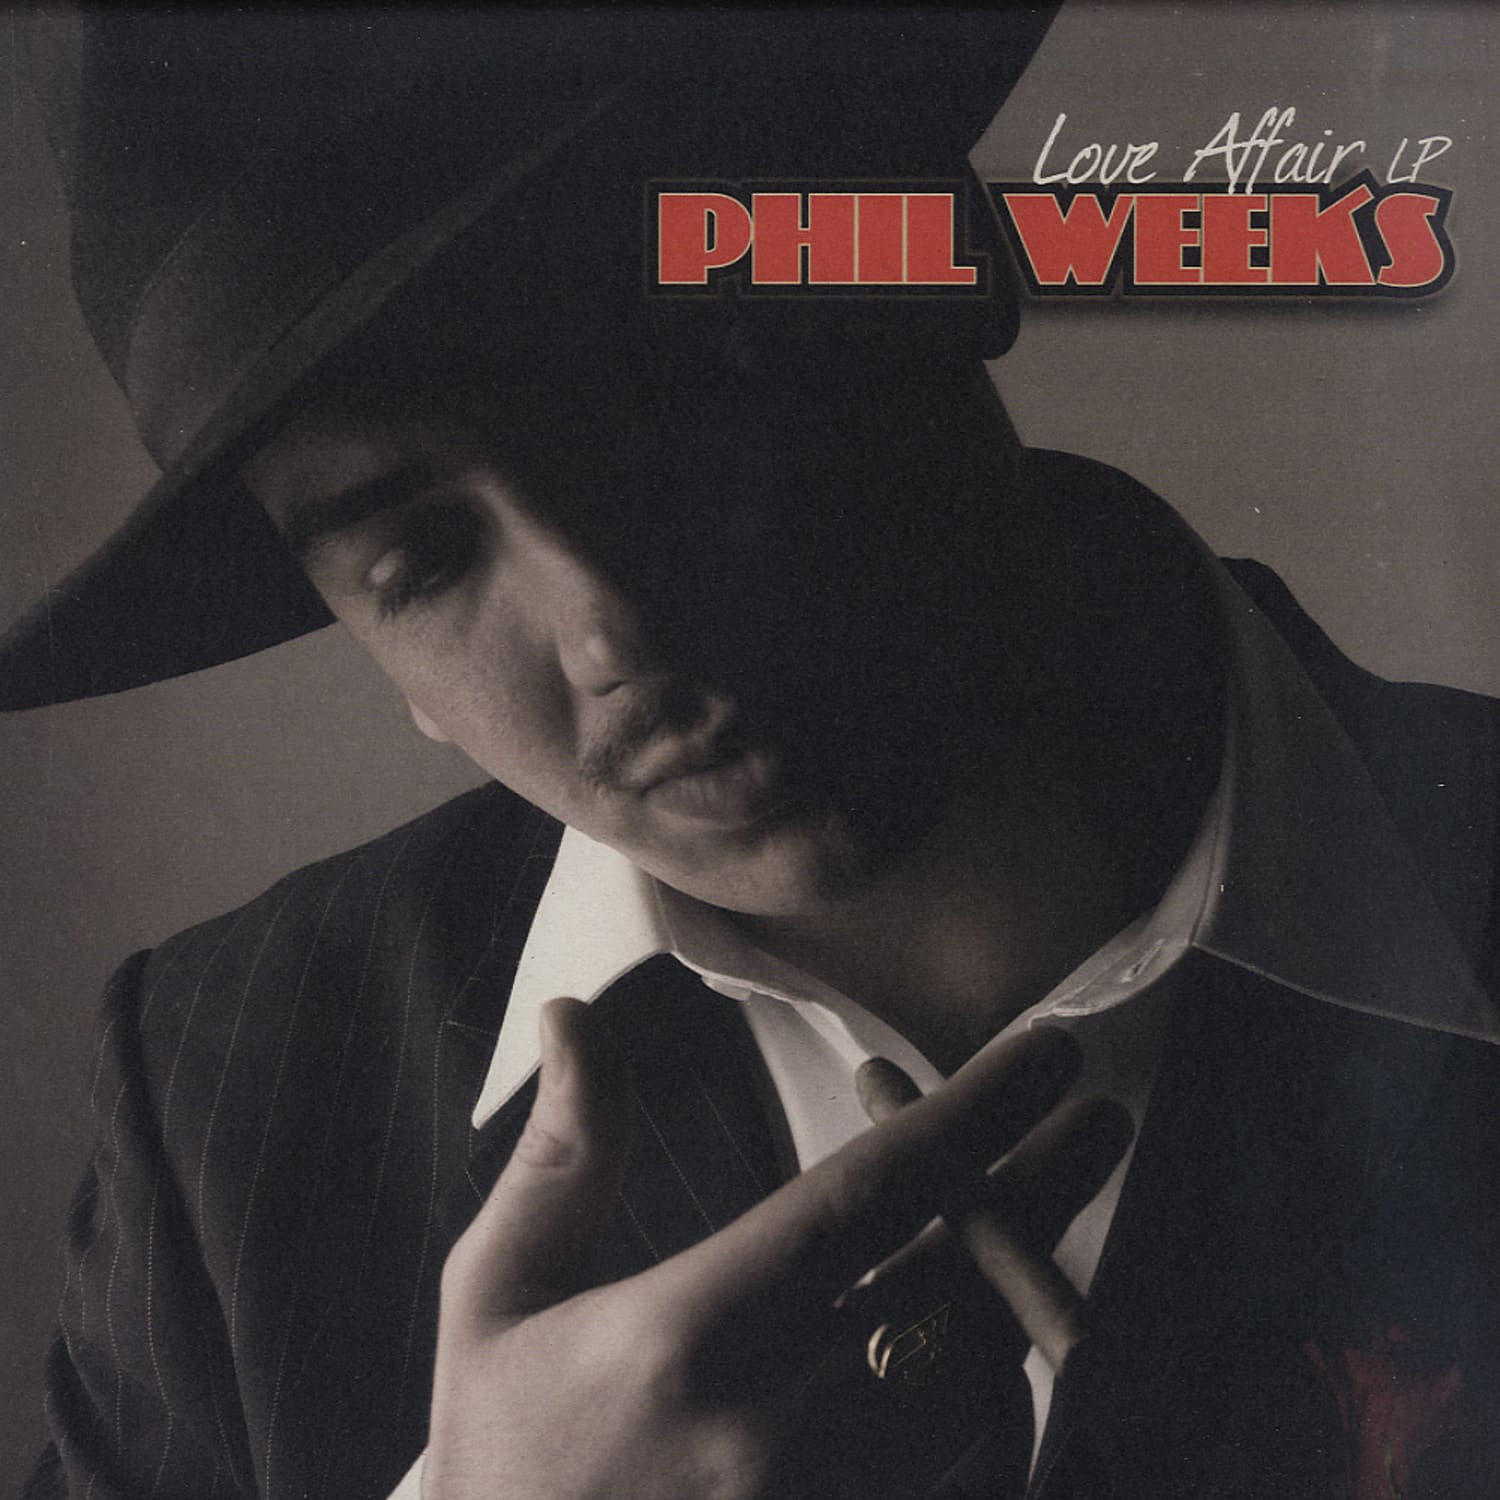 Phil Weeks - LOVE AFFAIR 